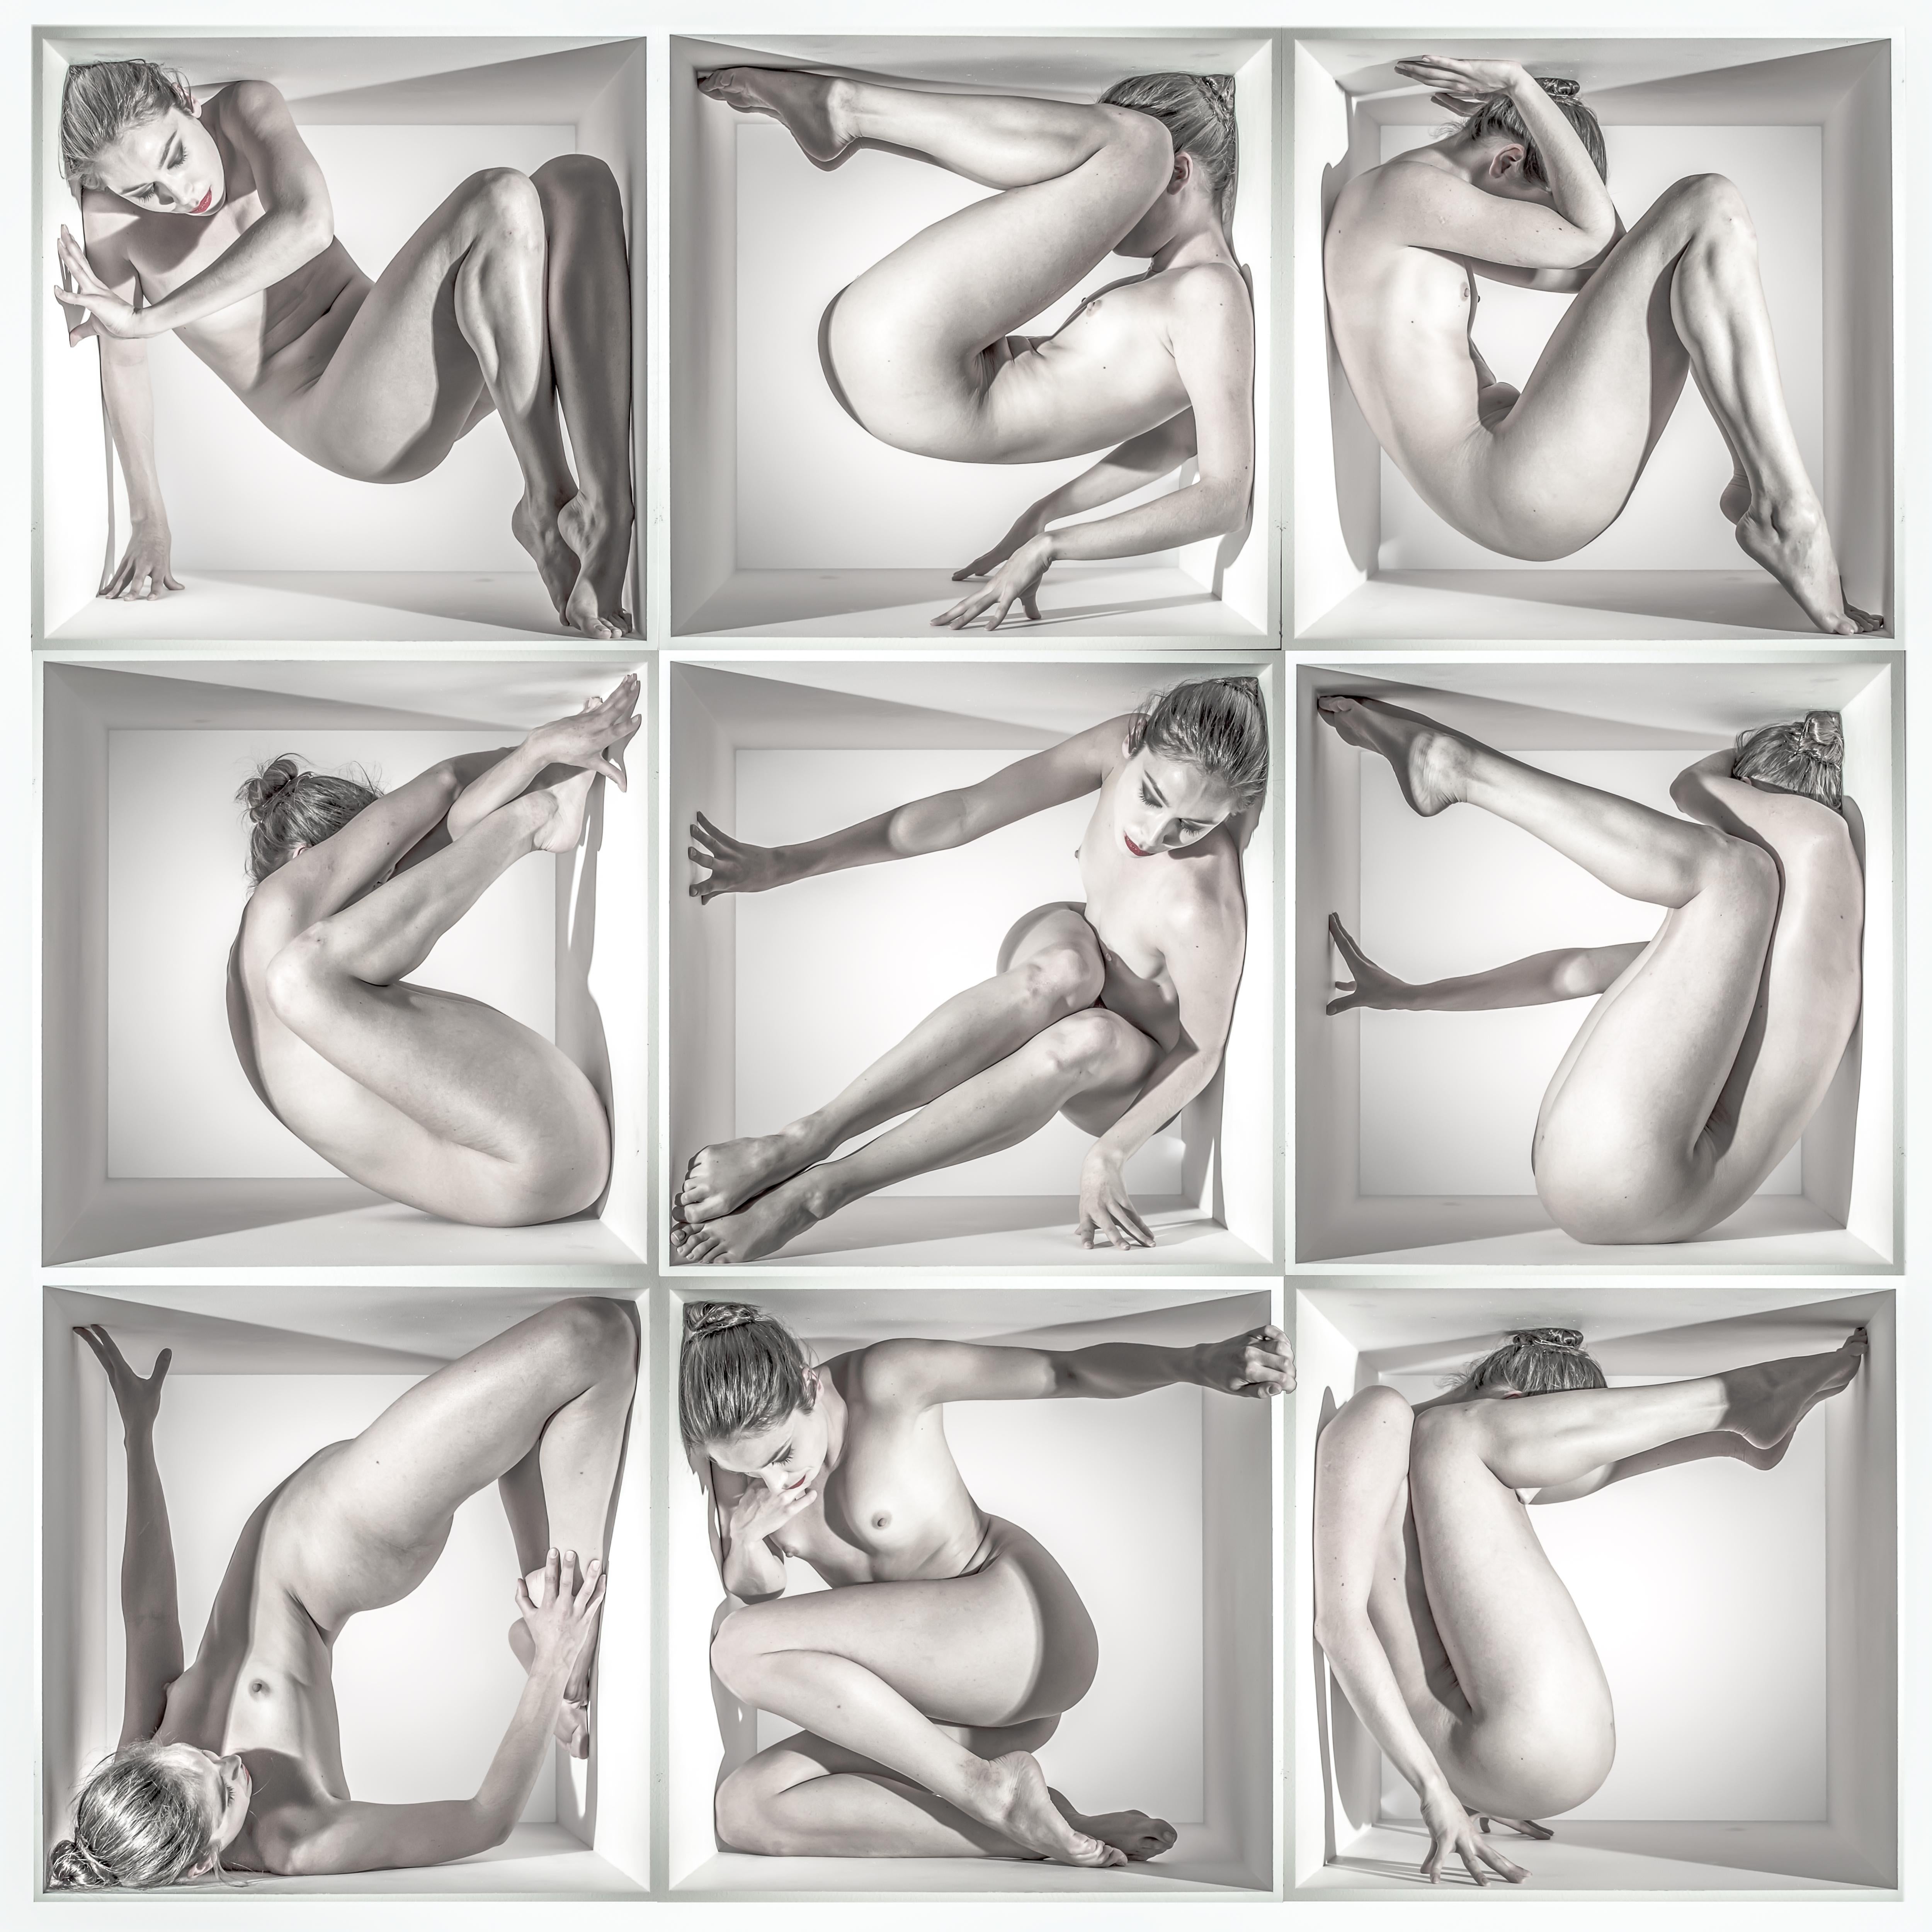 Jeff Robb Figurative Photograph - "UC 16" 3-D Lenticular Black & white figurative nude photo framed, Contemporary